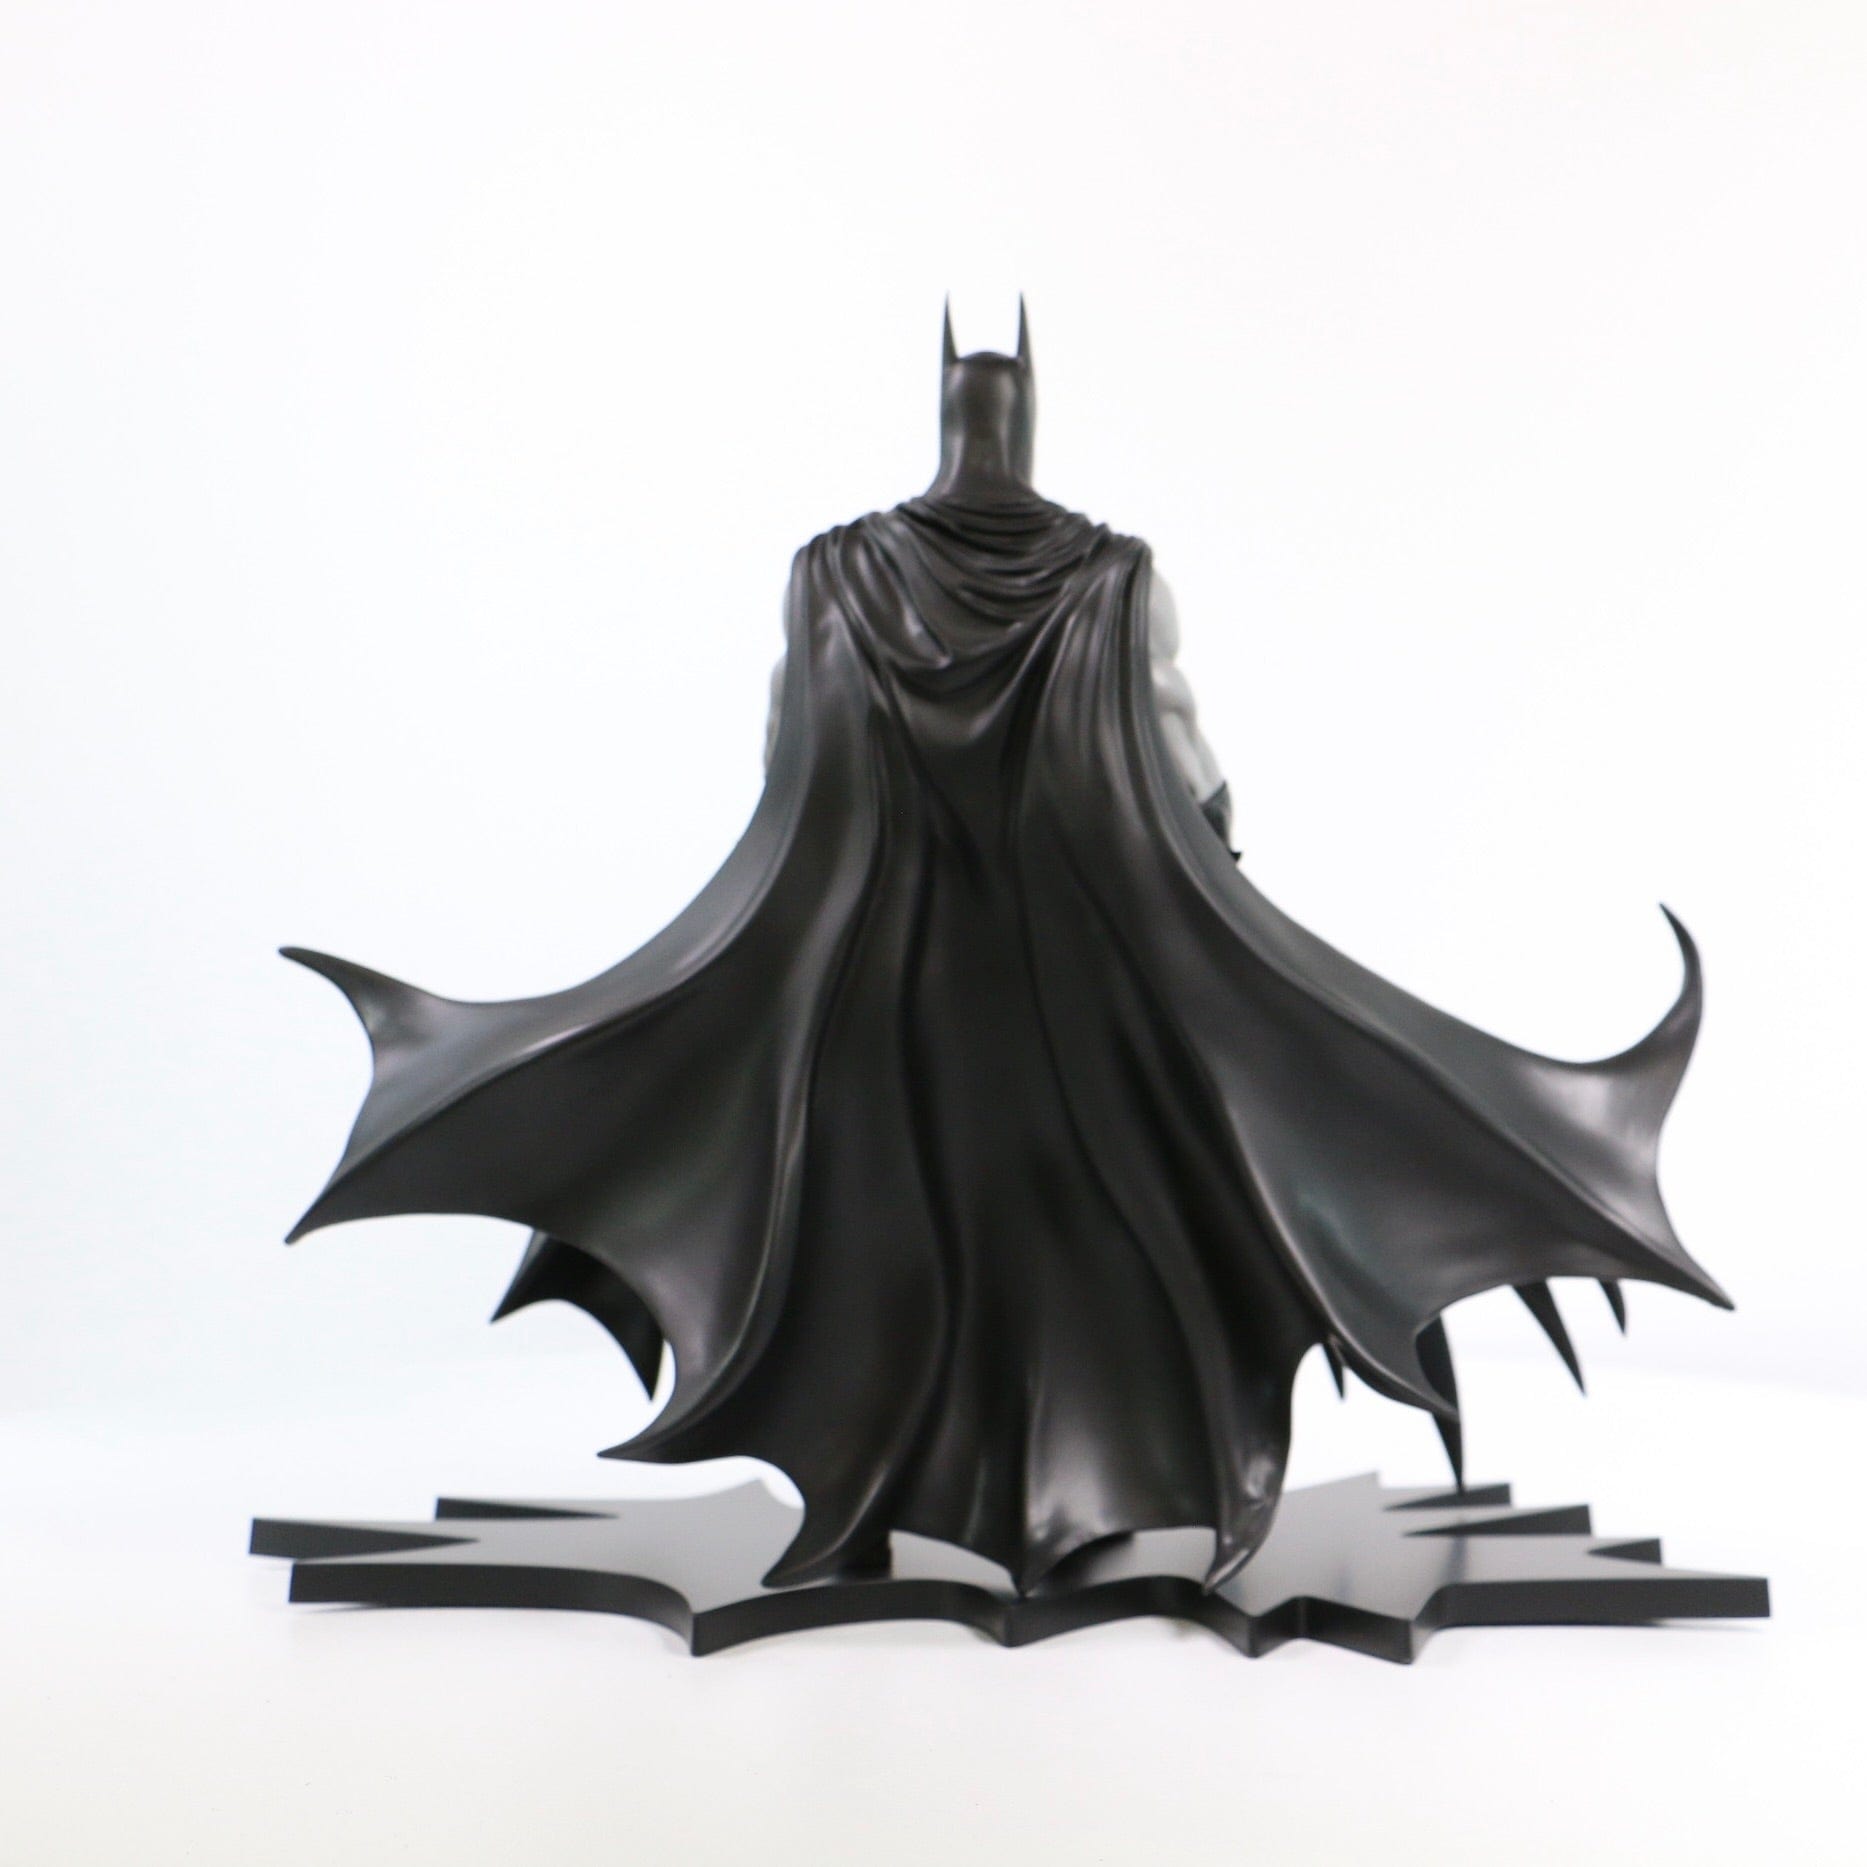 Pure Arts Limited DC Heroes Batman Black Version 1:8 Scale Statue (Previews Exclusive)